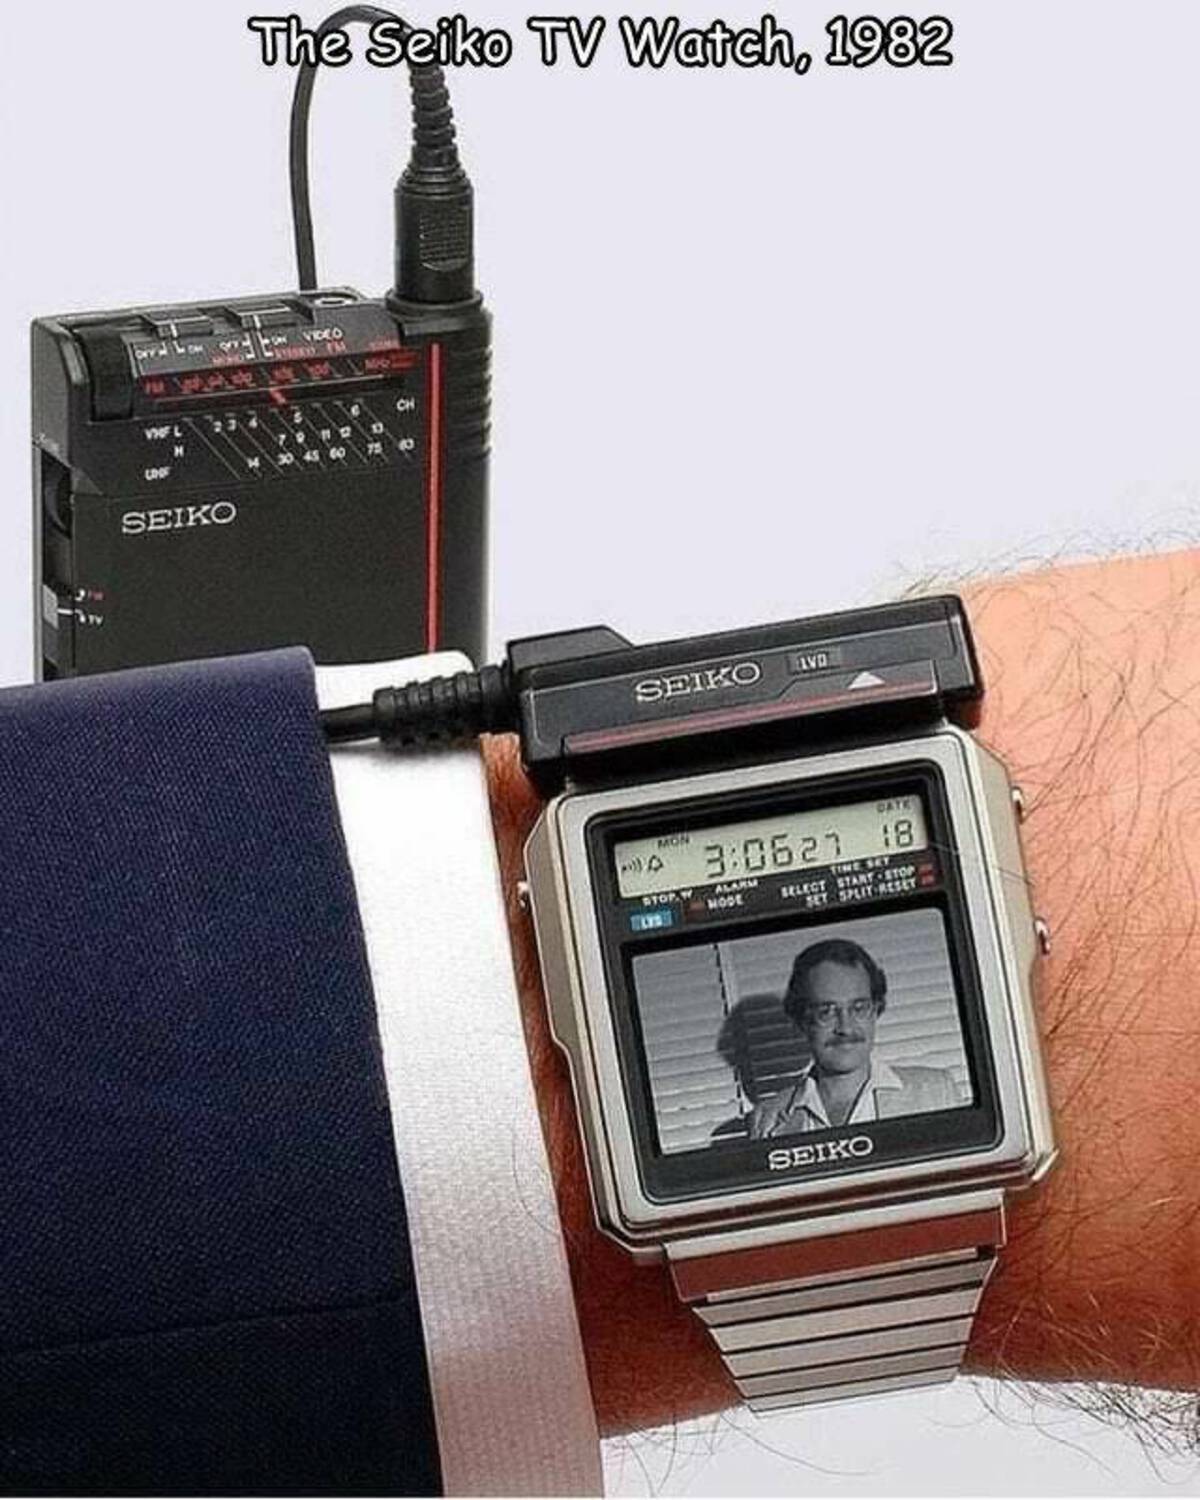 80s tv watch - Seiko The Seiko Tv Watch, 1982 Video Mhq Ch Seiko Avd 27 Mon Stop W Date 18 Alarm Mode Time Say Select StartStop Set Split Reset Seiko